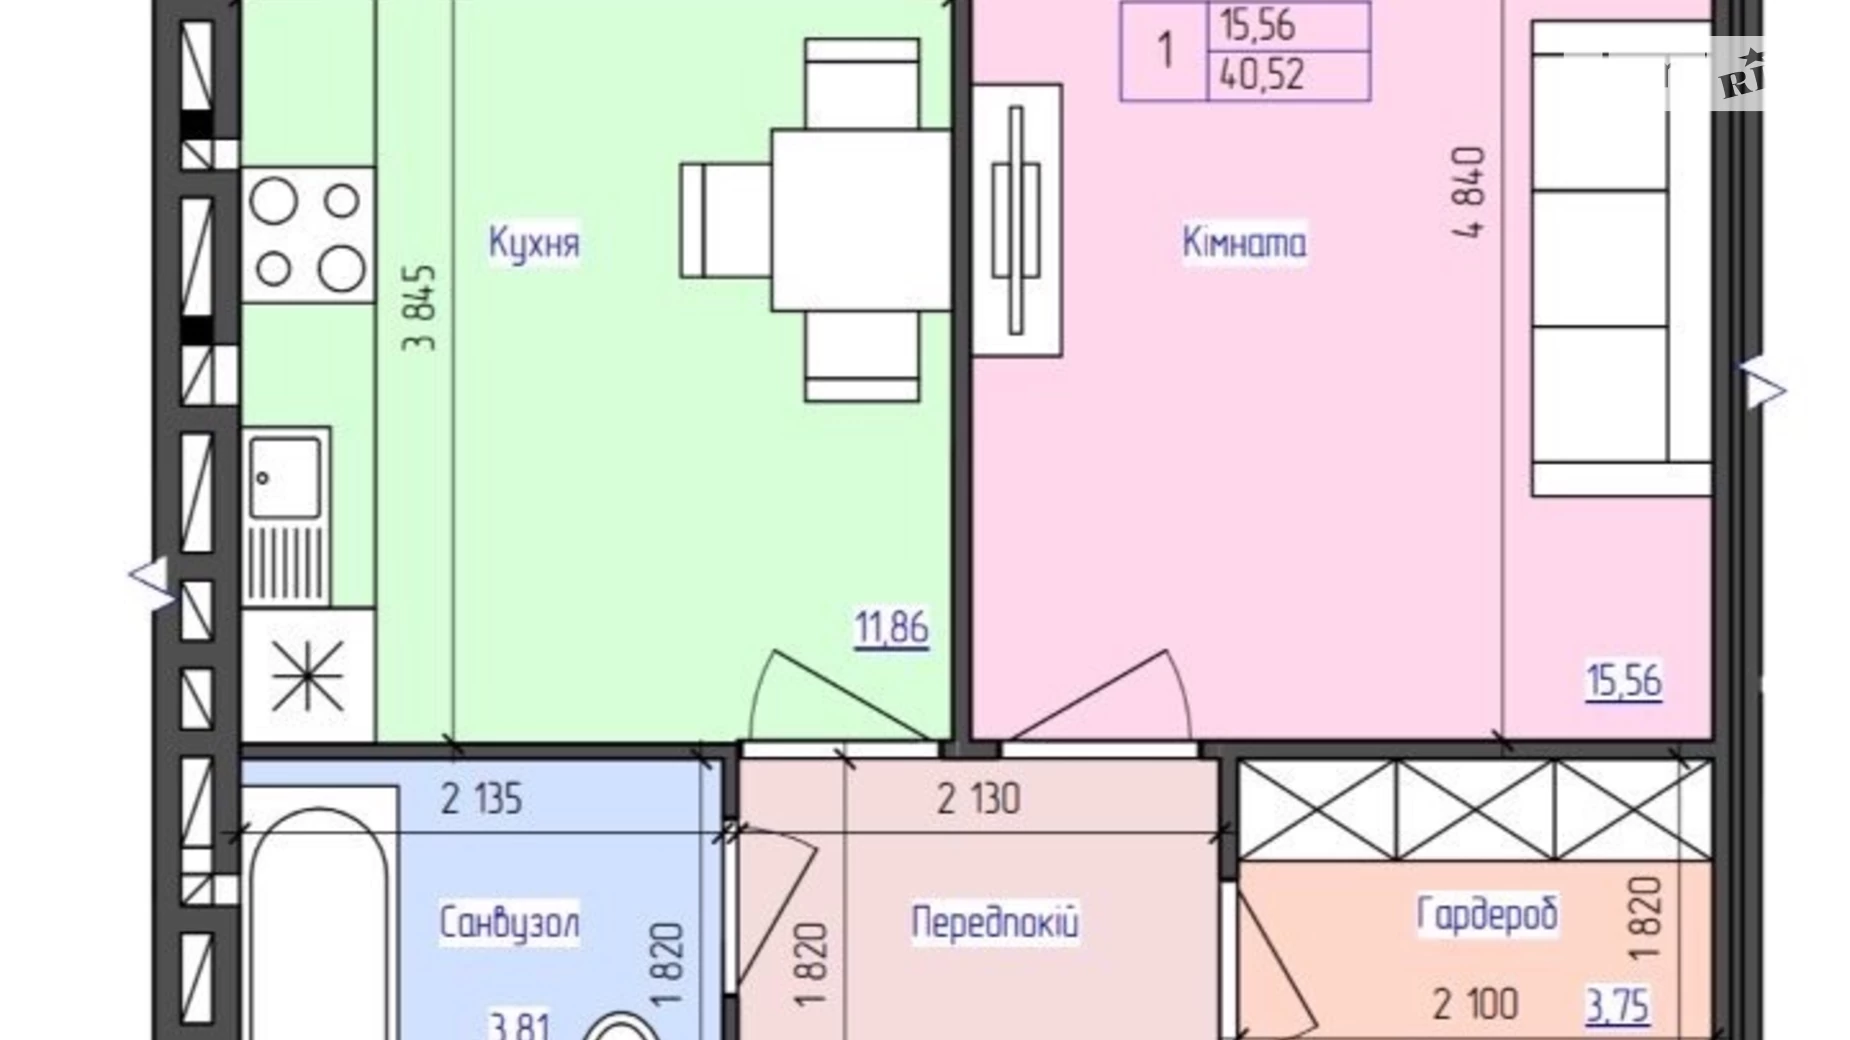 1-кімнатна квартира 41 кв. м у Луцьку